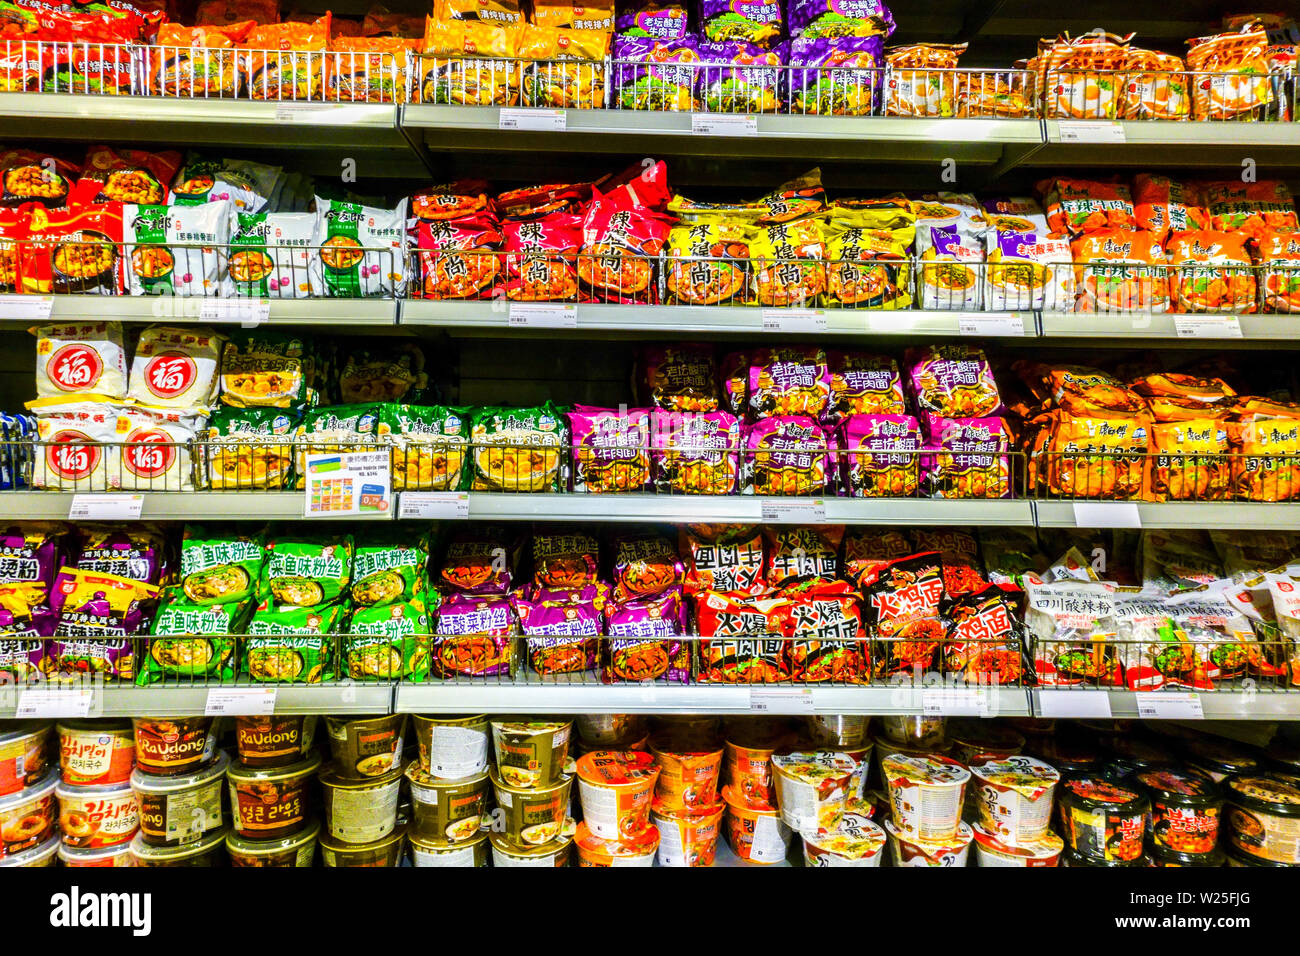 Asiatische Supermarktregale, Instant-Suppen, Dresden, Deutschland Supermärkte Stockfoto